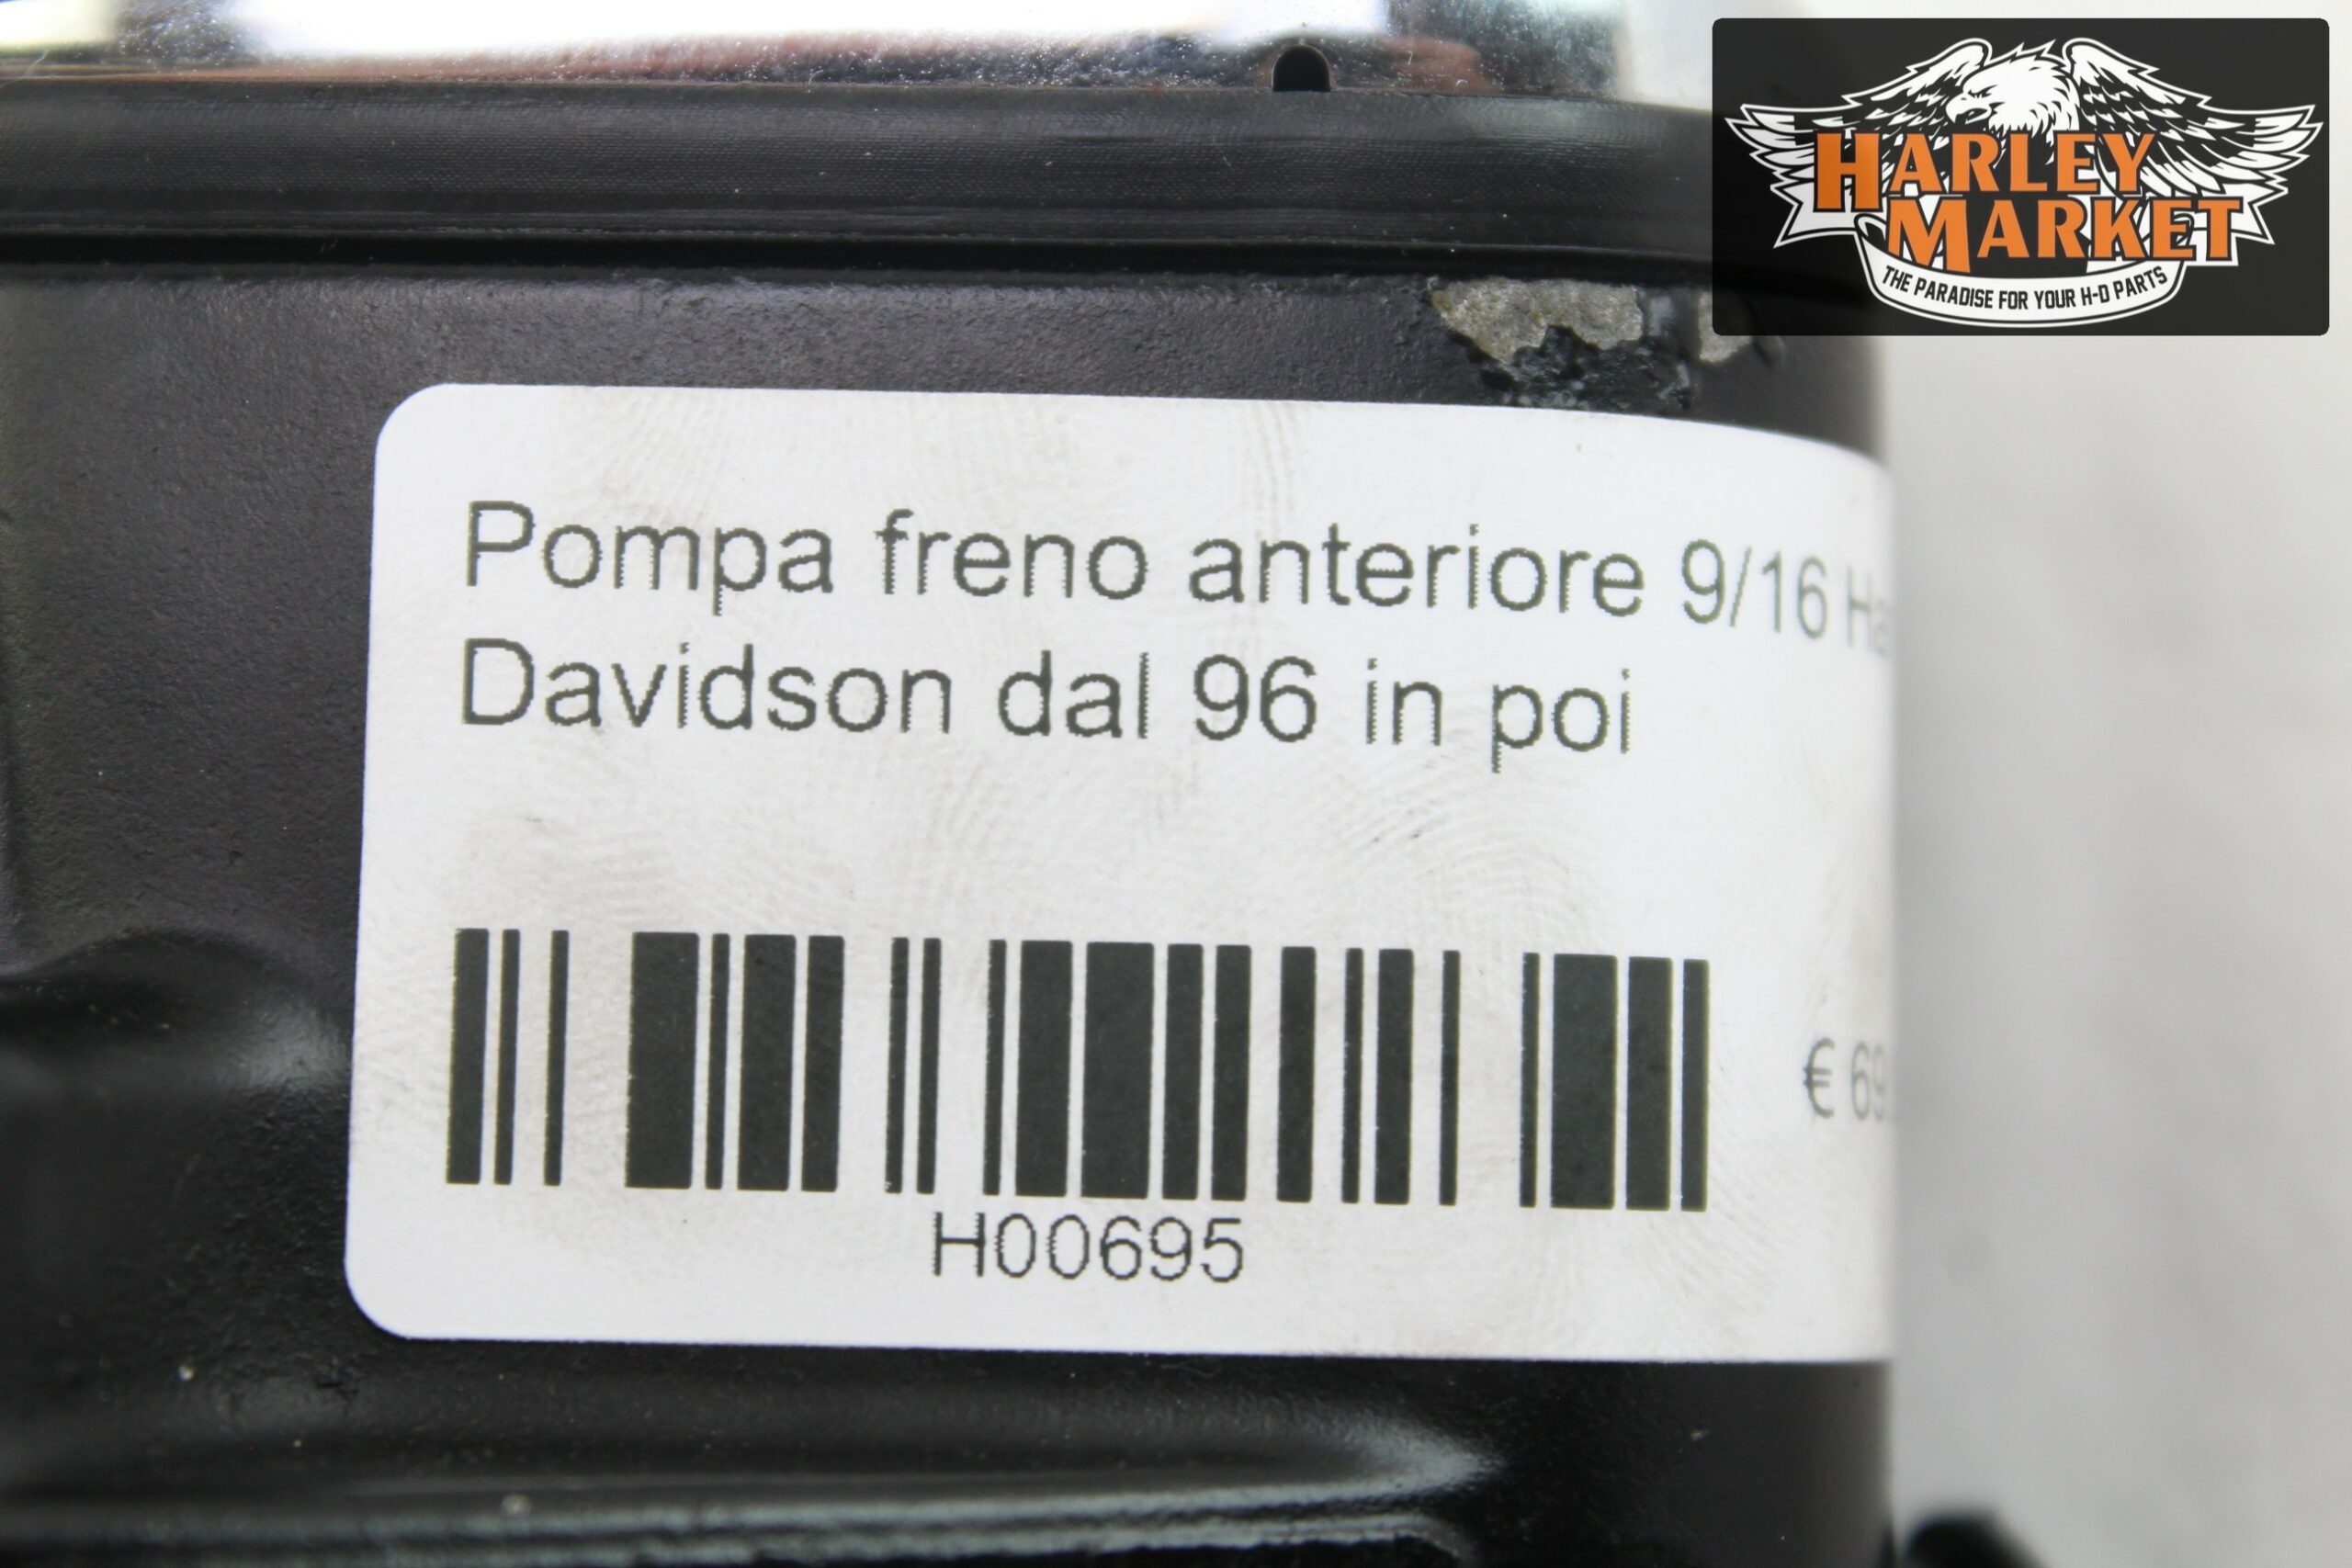 Pompa freno anteriore 9/16 Harley Davidson dal 96 in poi